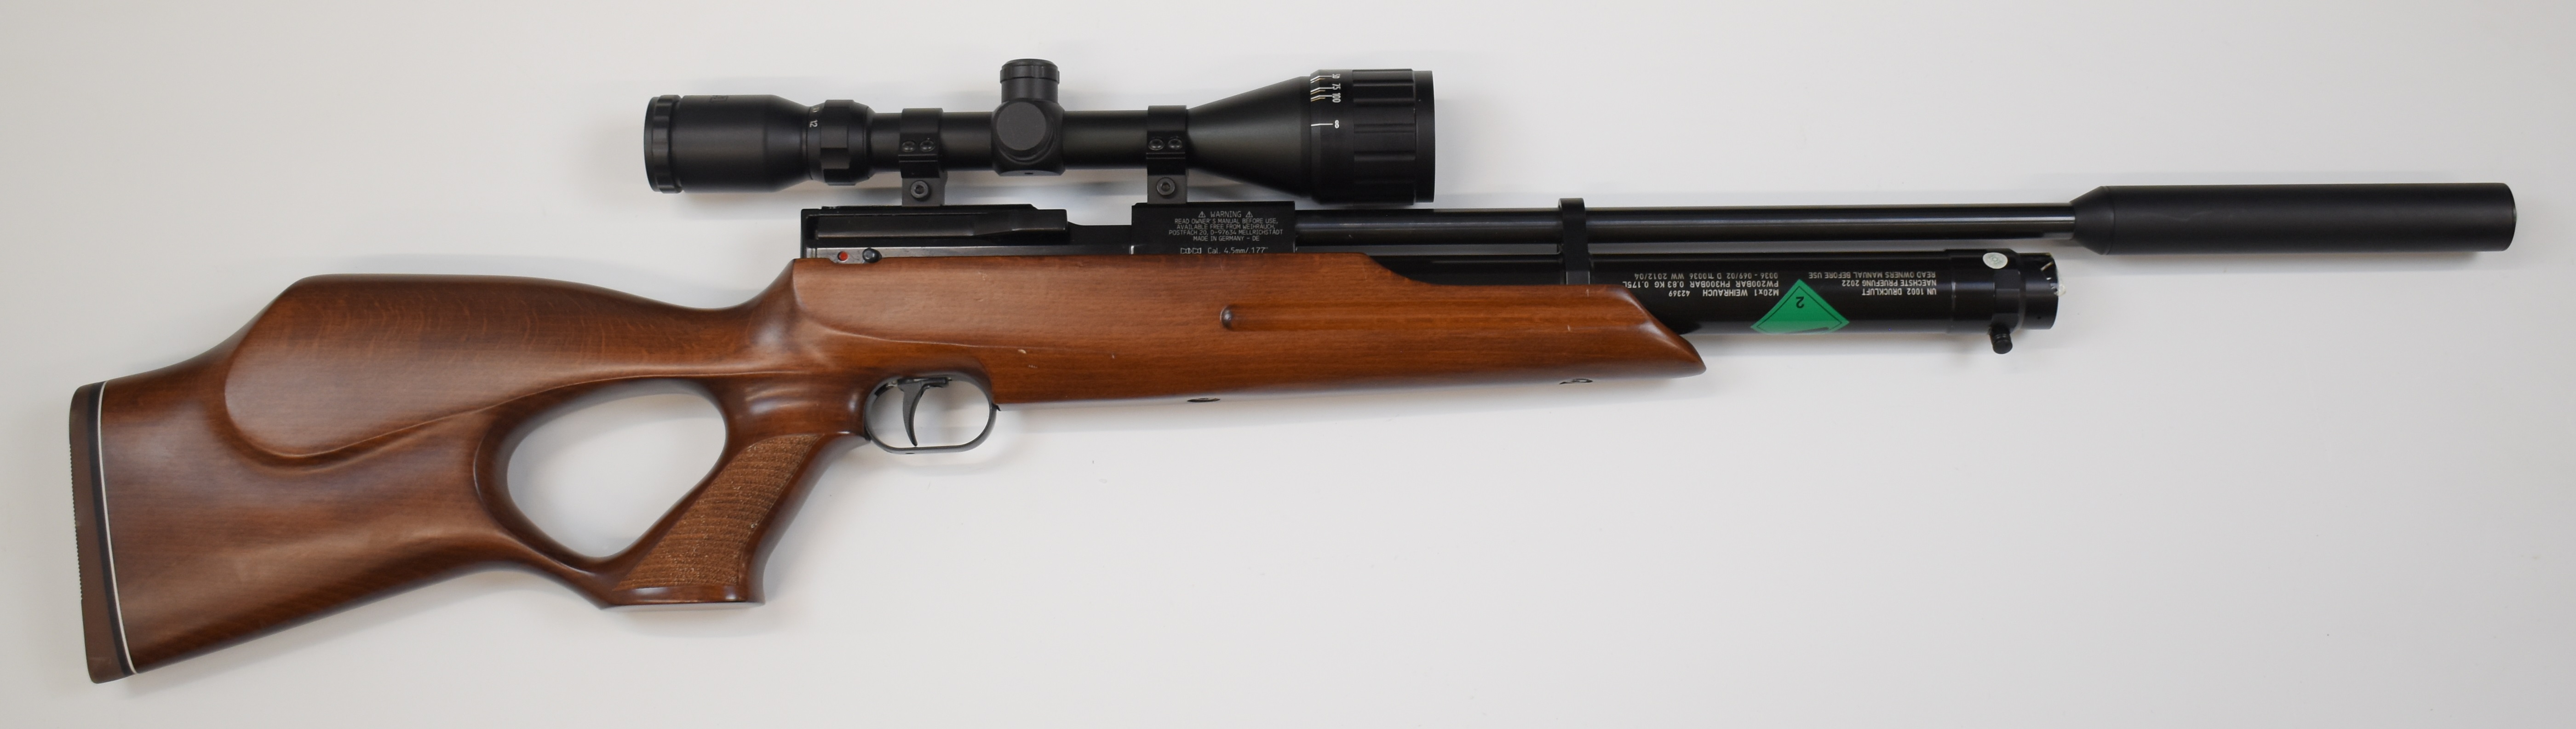 Weihrauch HW101 .177 PCP air rifle with textured semi-pistol grip, raised cheek piece, adjustable - Image 2 of 10